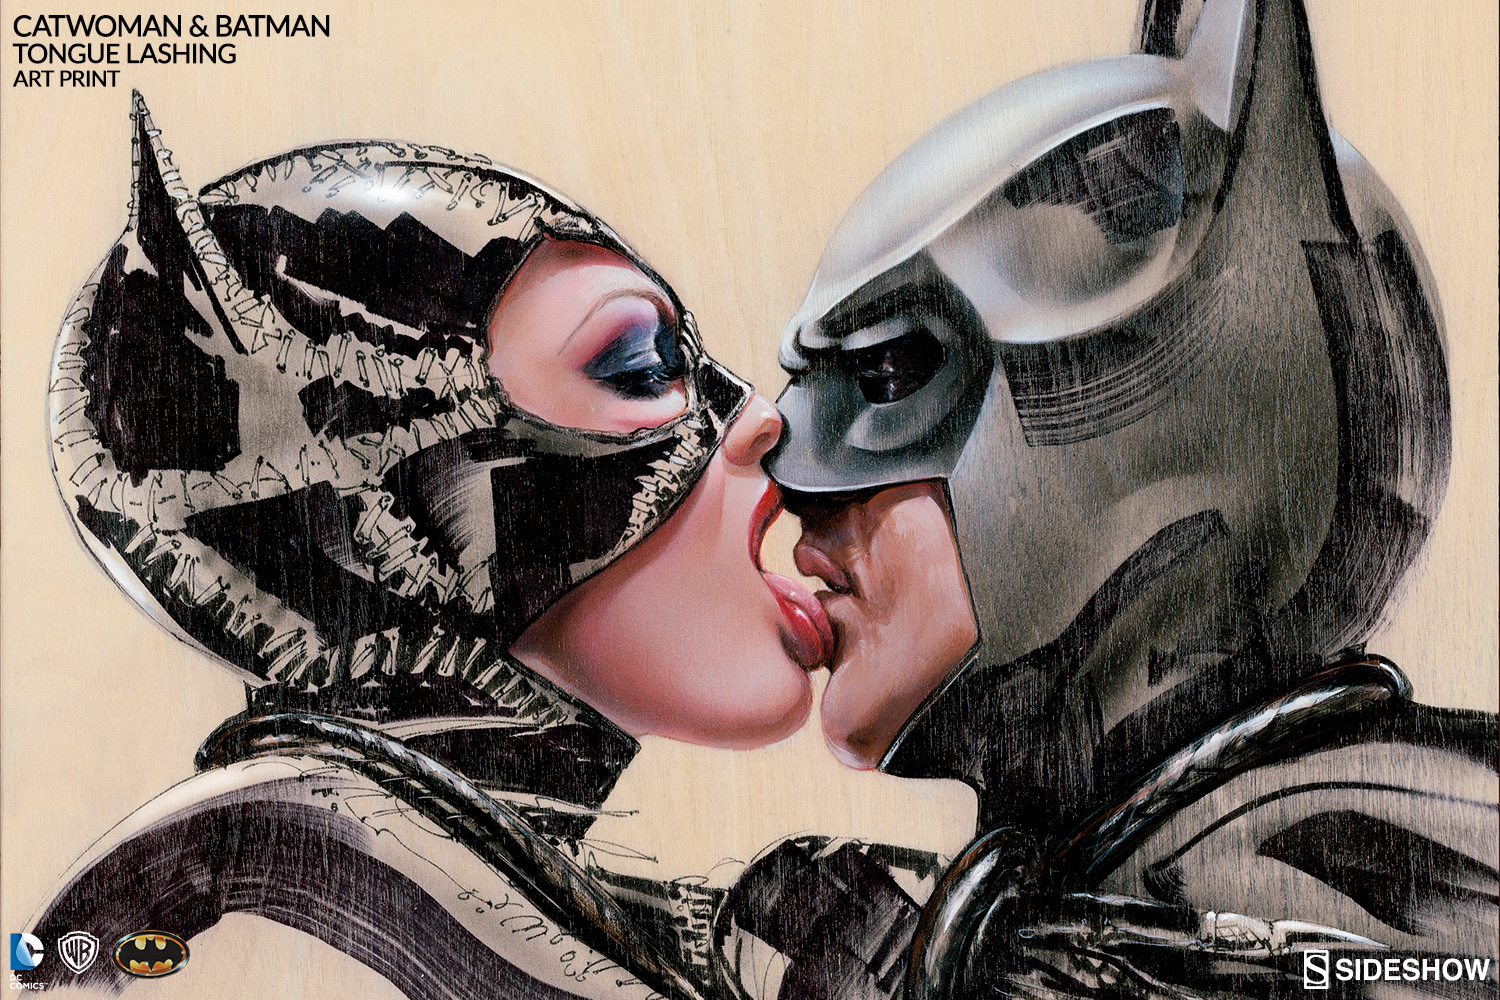 http://www.sideshowtoy.com/assets/products/500200-batman-catwoman-tongue-lashing/lg/dc-comics-catwoman-&-batman-tongue-lashing-art-print-500200-02.jpg